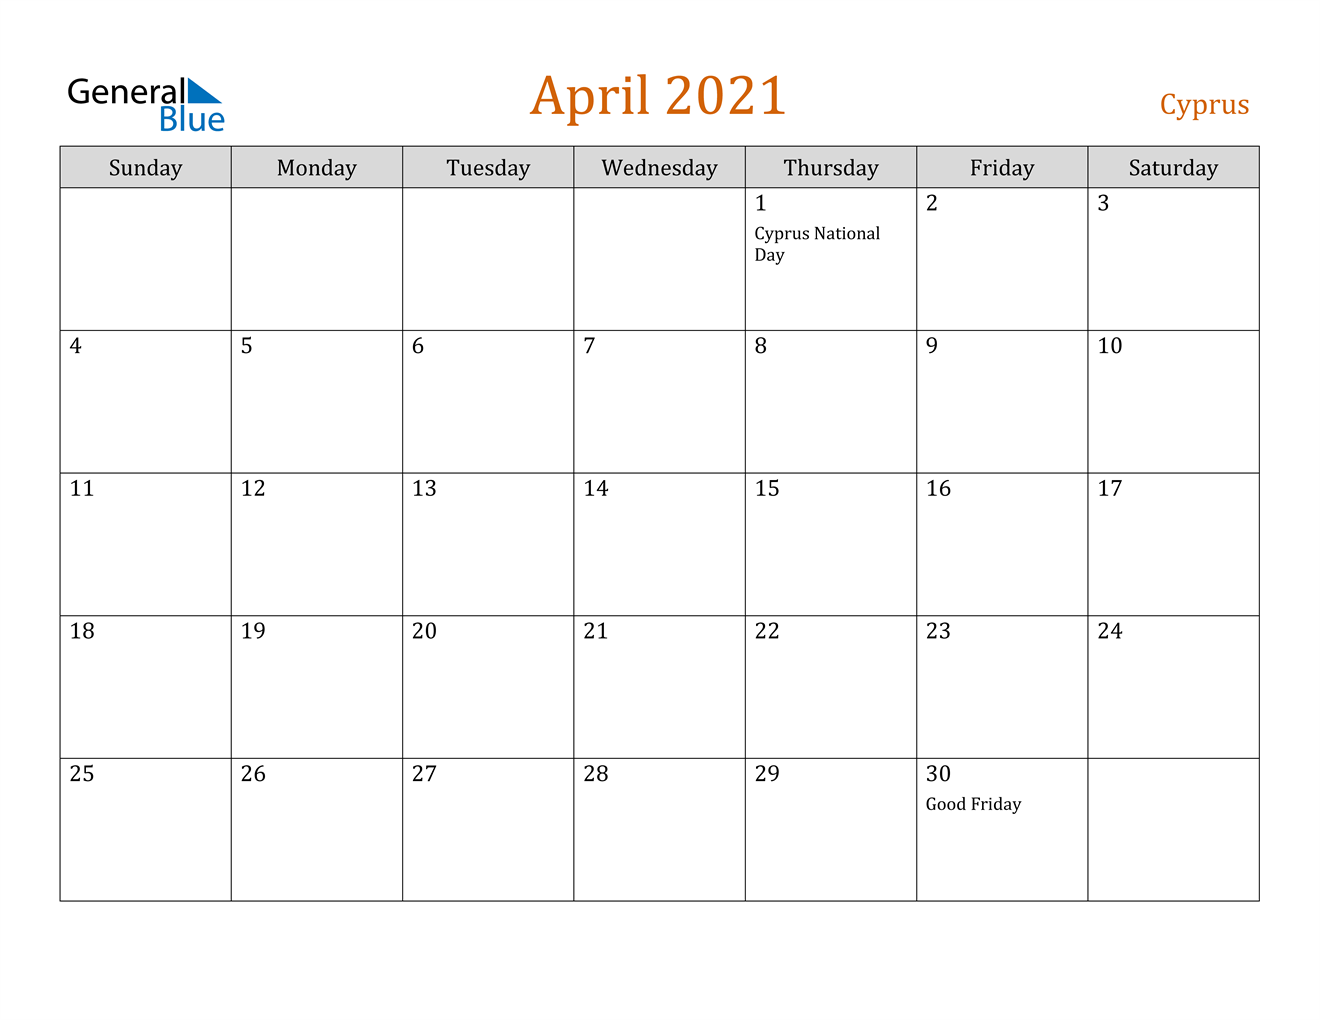 April 2021 Calendar - Cyprus